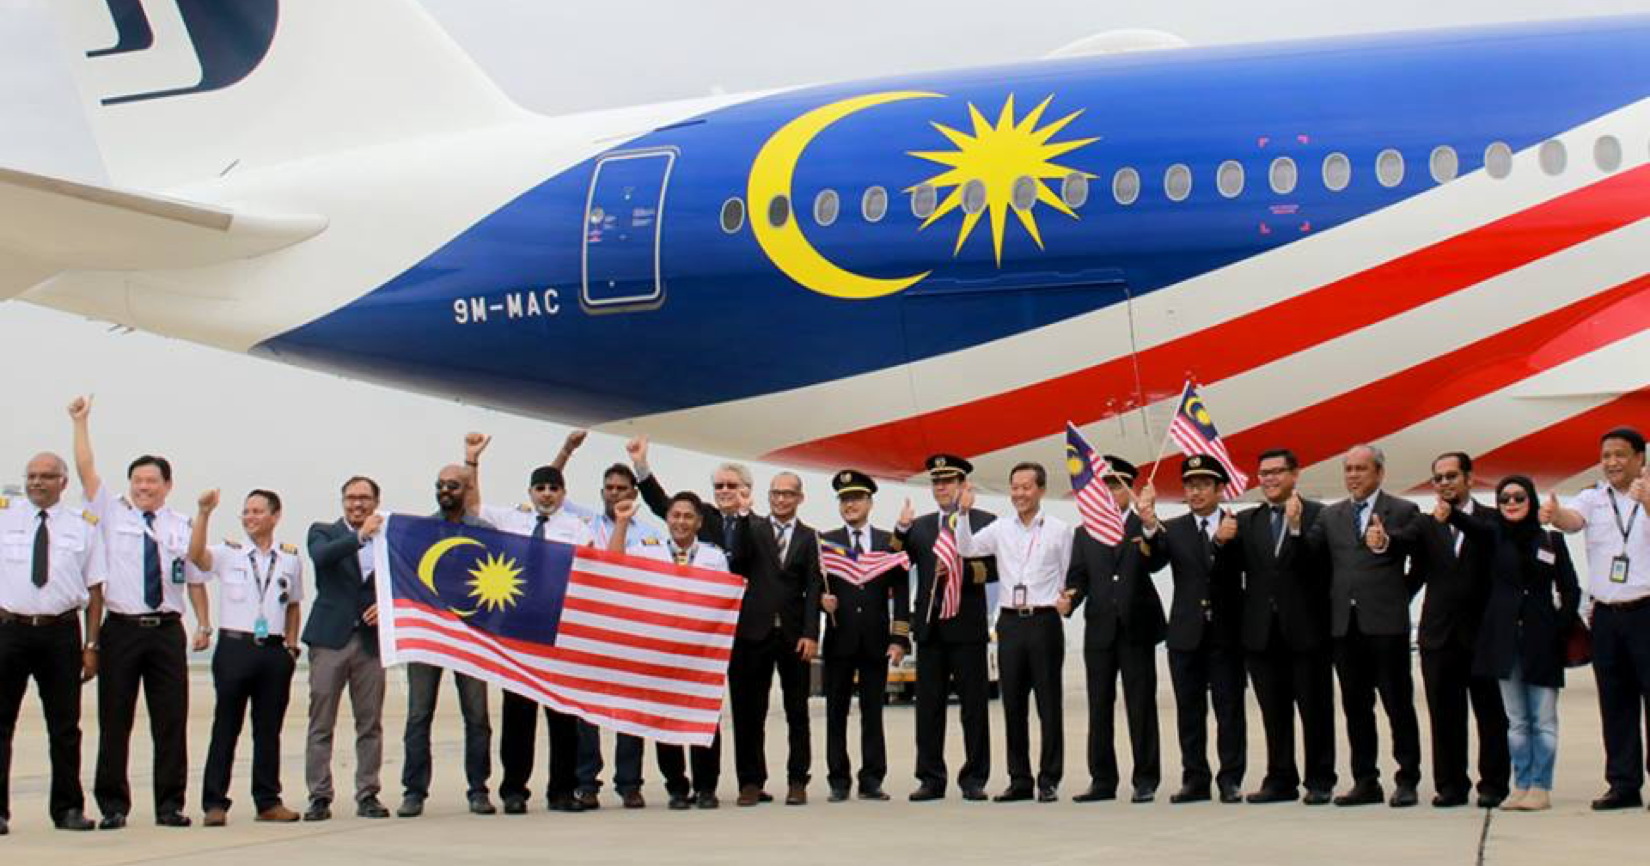 Малайзия эйрлайнс. Авиакомпания Malaysia Airlines. Малайзия авиалинии. Малавийские авиалинии. Самолет малазийские авиалинии.